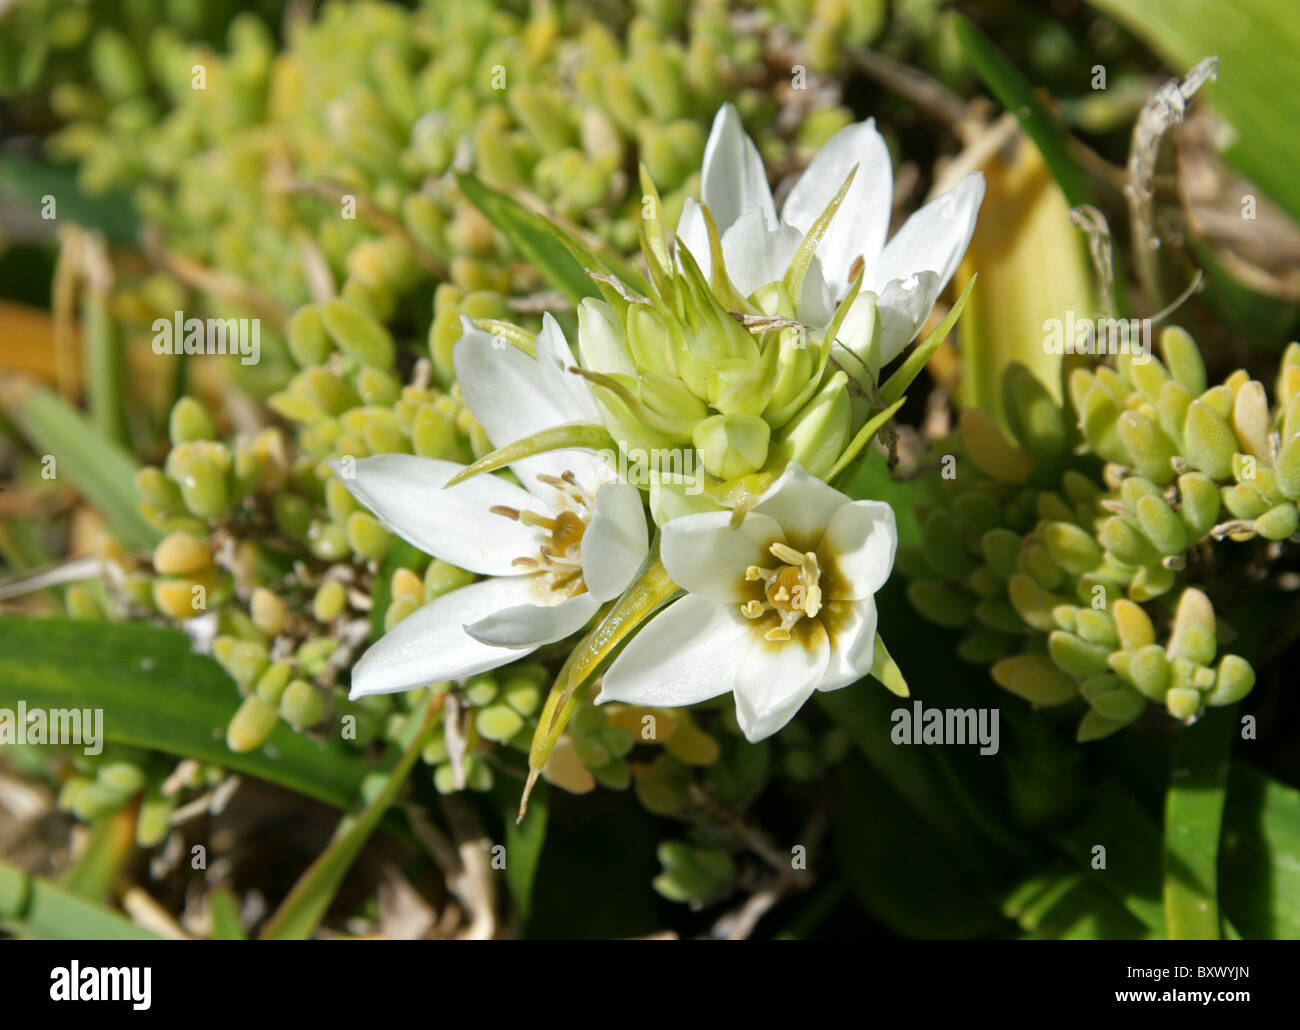 Cape Chincherinchee, Chinkerinchee, Cream Starflower, South-African Star Flower, Ornithogalum thyrsoides, Hyacinthaceae S Africa Stock Photo